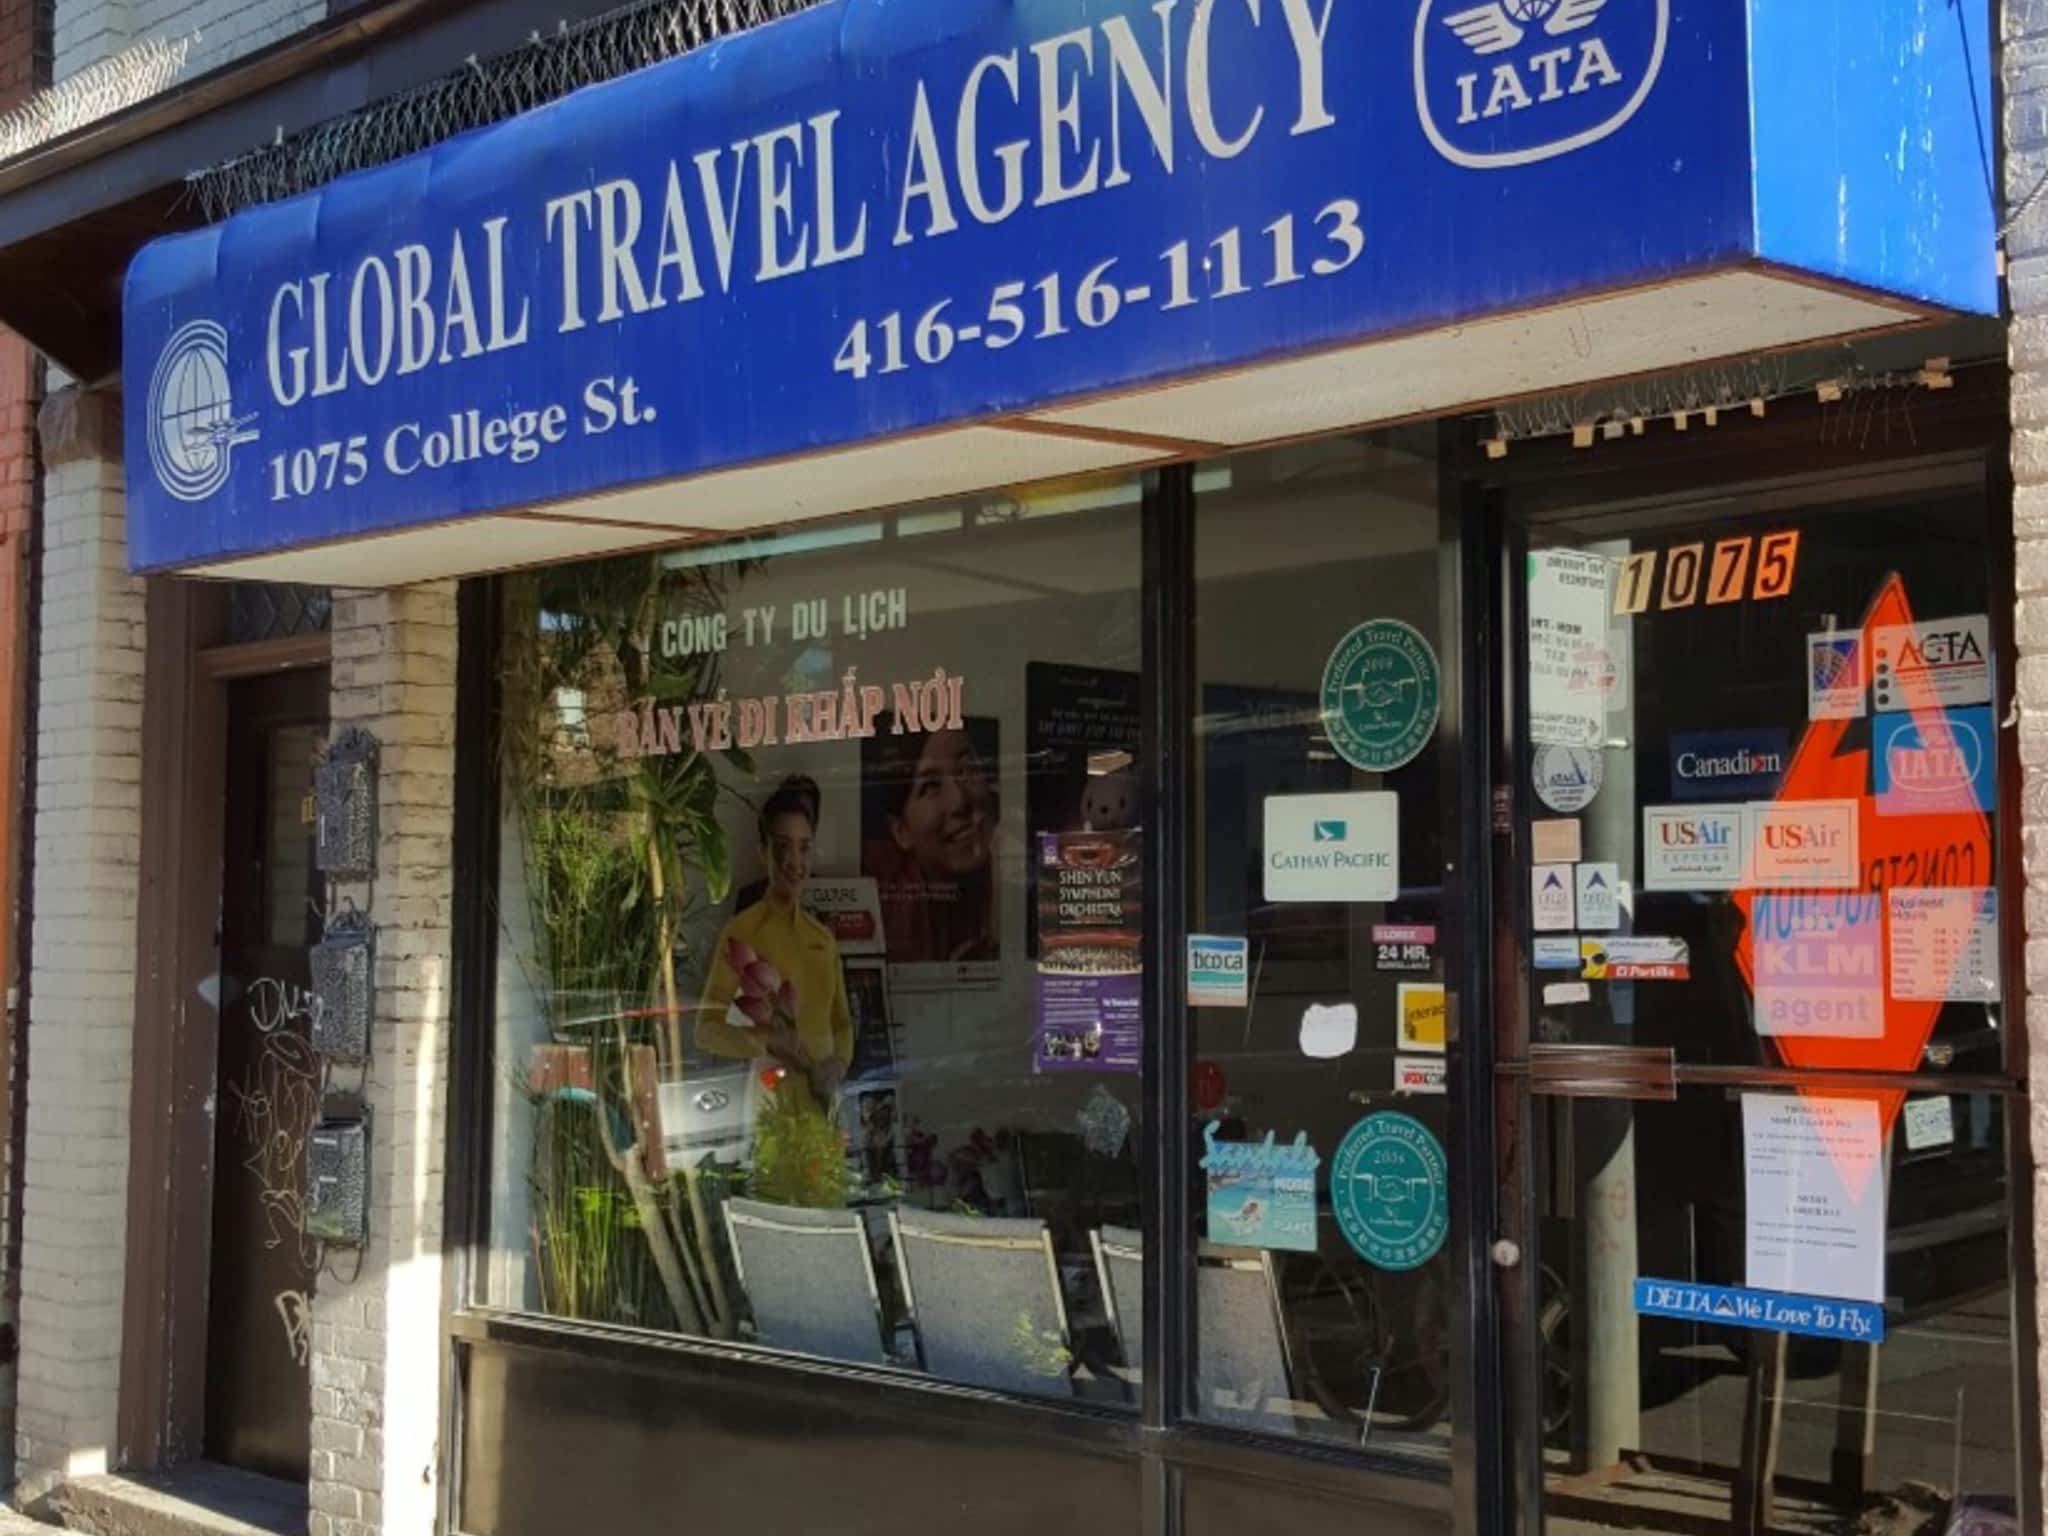 correia travel agency toronto